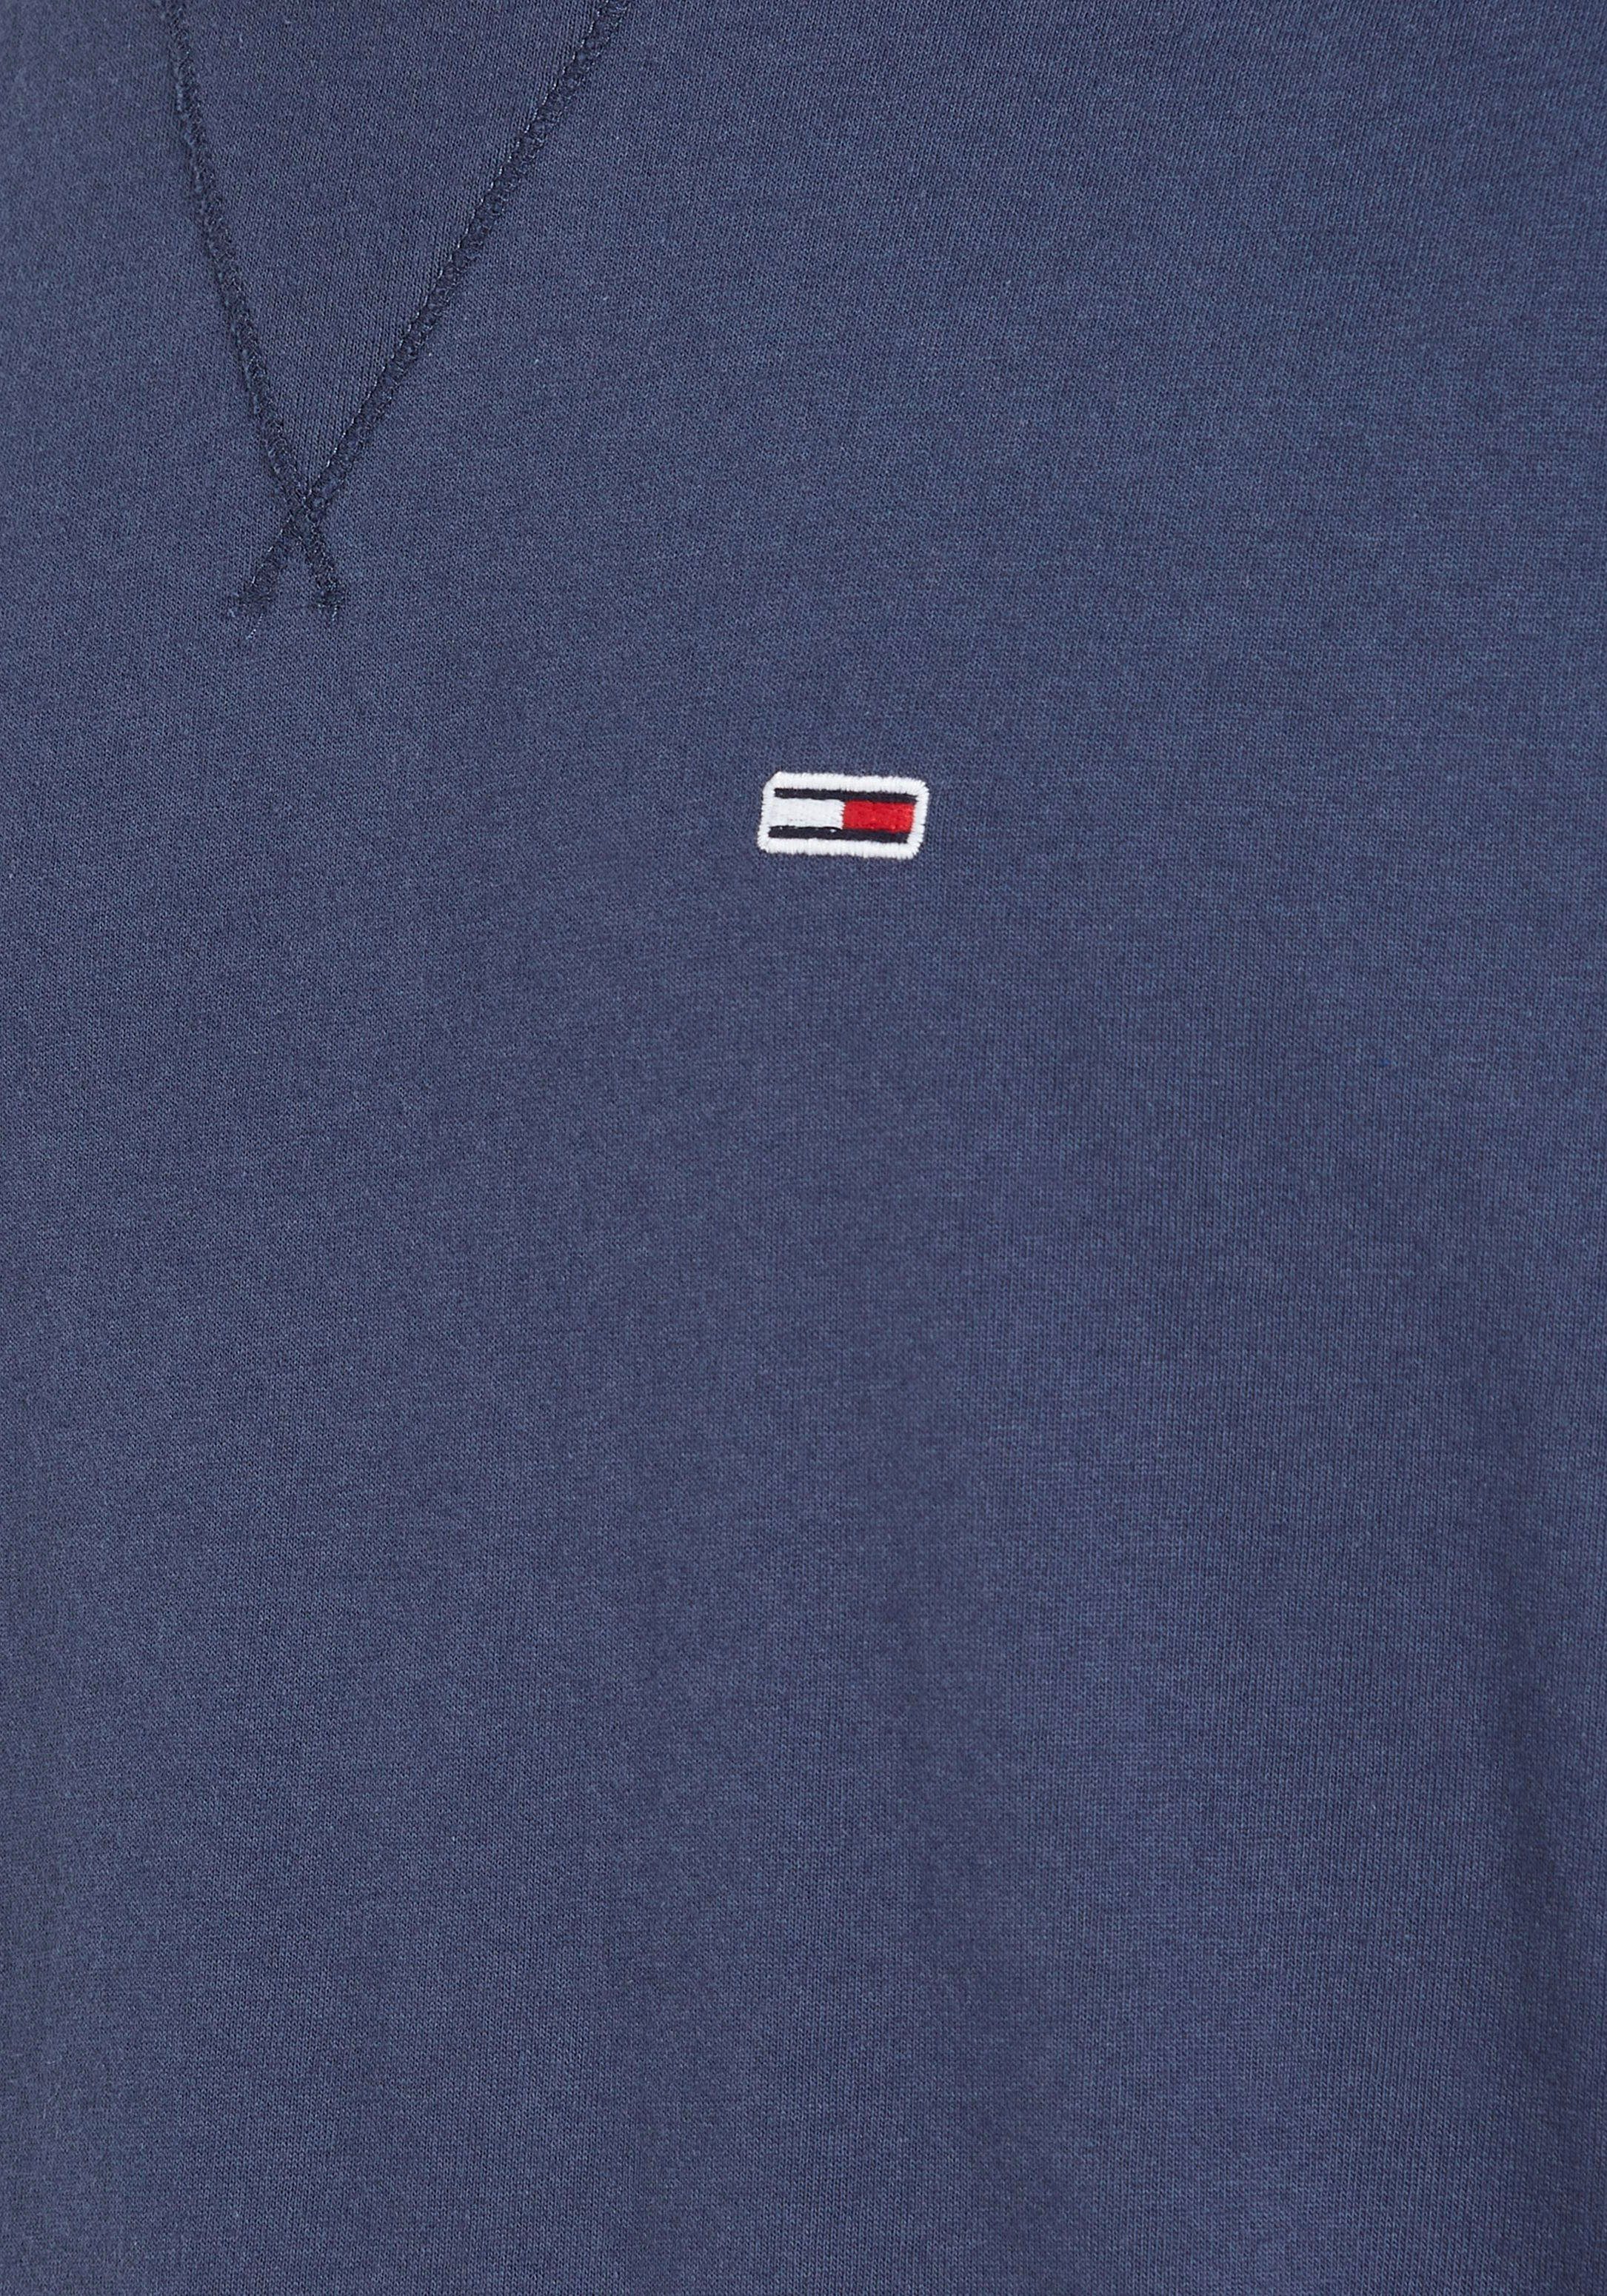 CLSC TJM Twilight T-Shirt Navy Tommy Jeans FLAG TEE DETAIL RIB